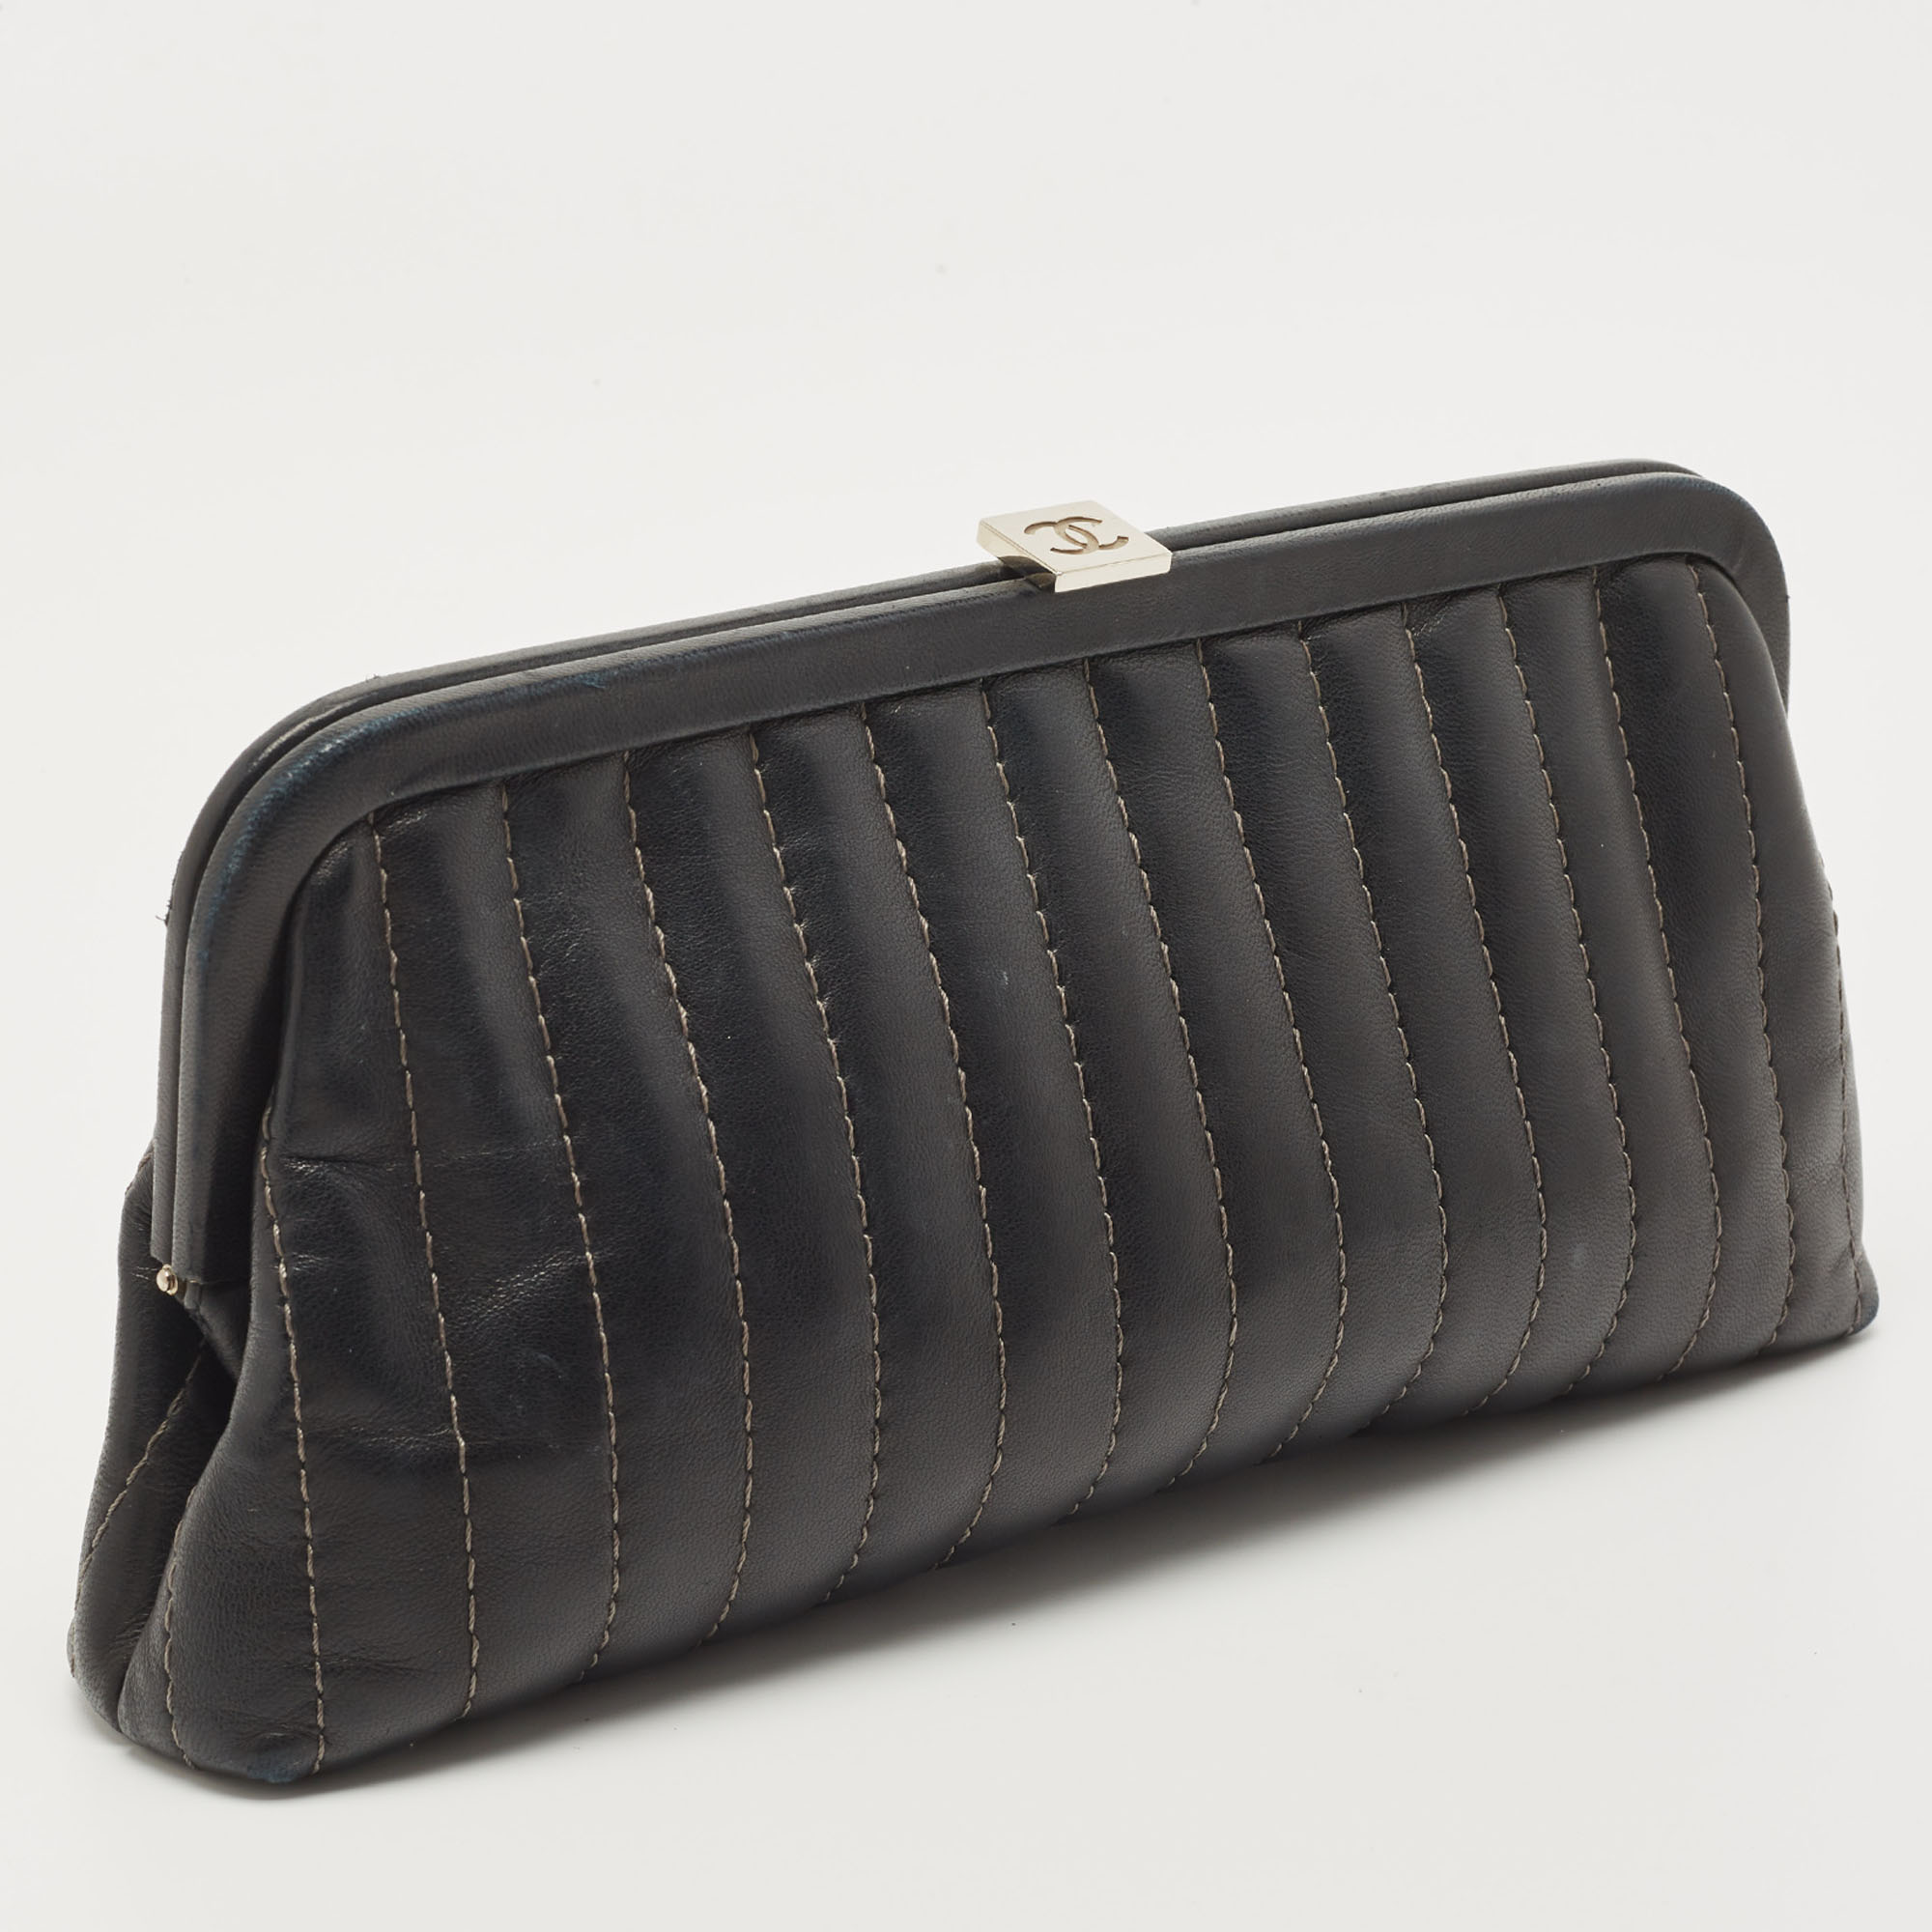 Chanel Black Vertical Stitch Leather Vintage Clutch